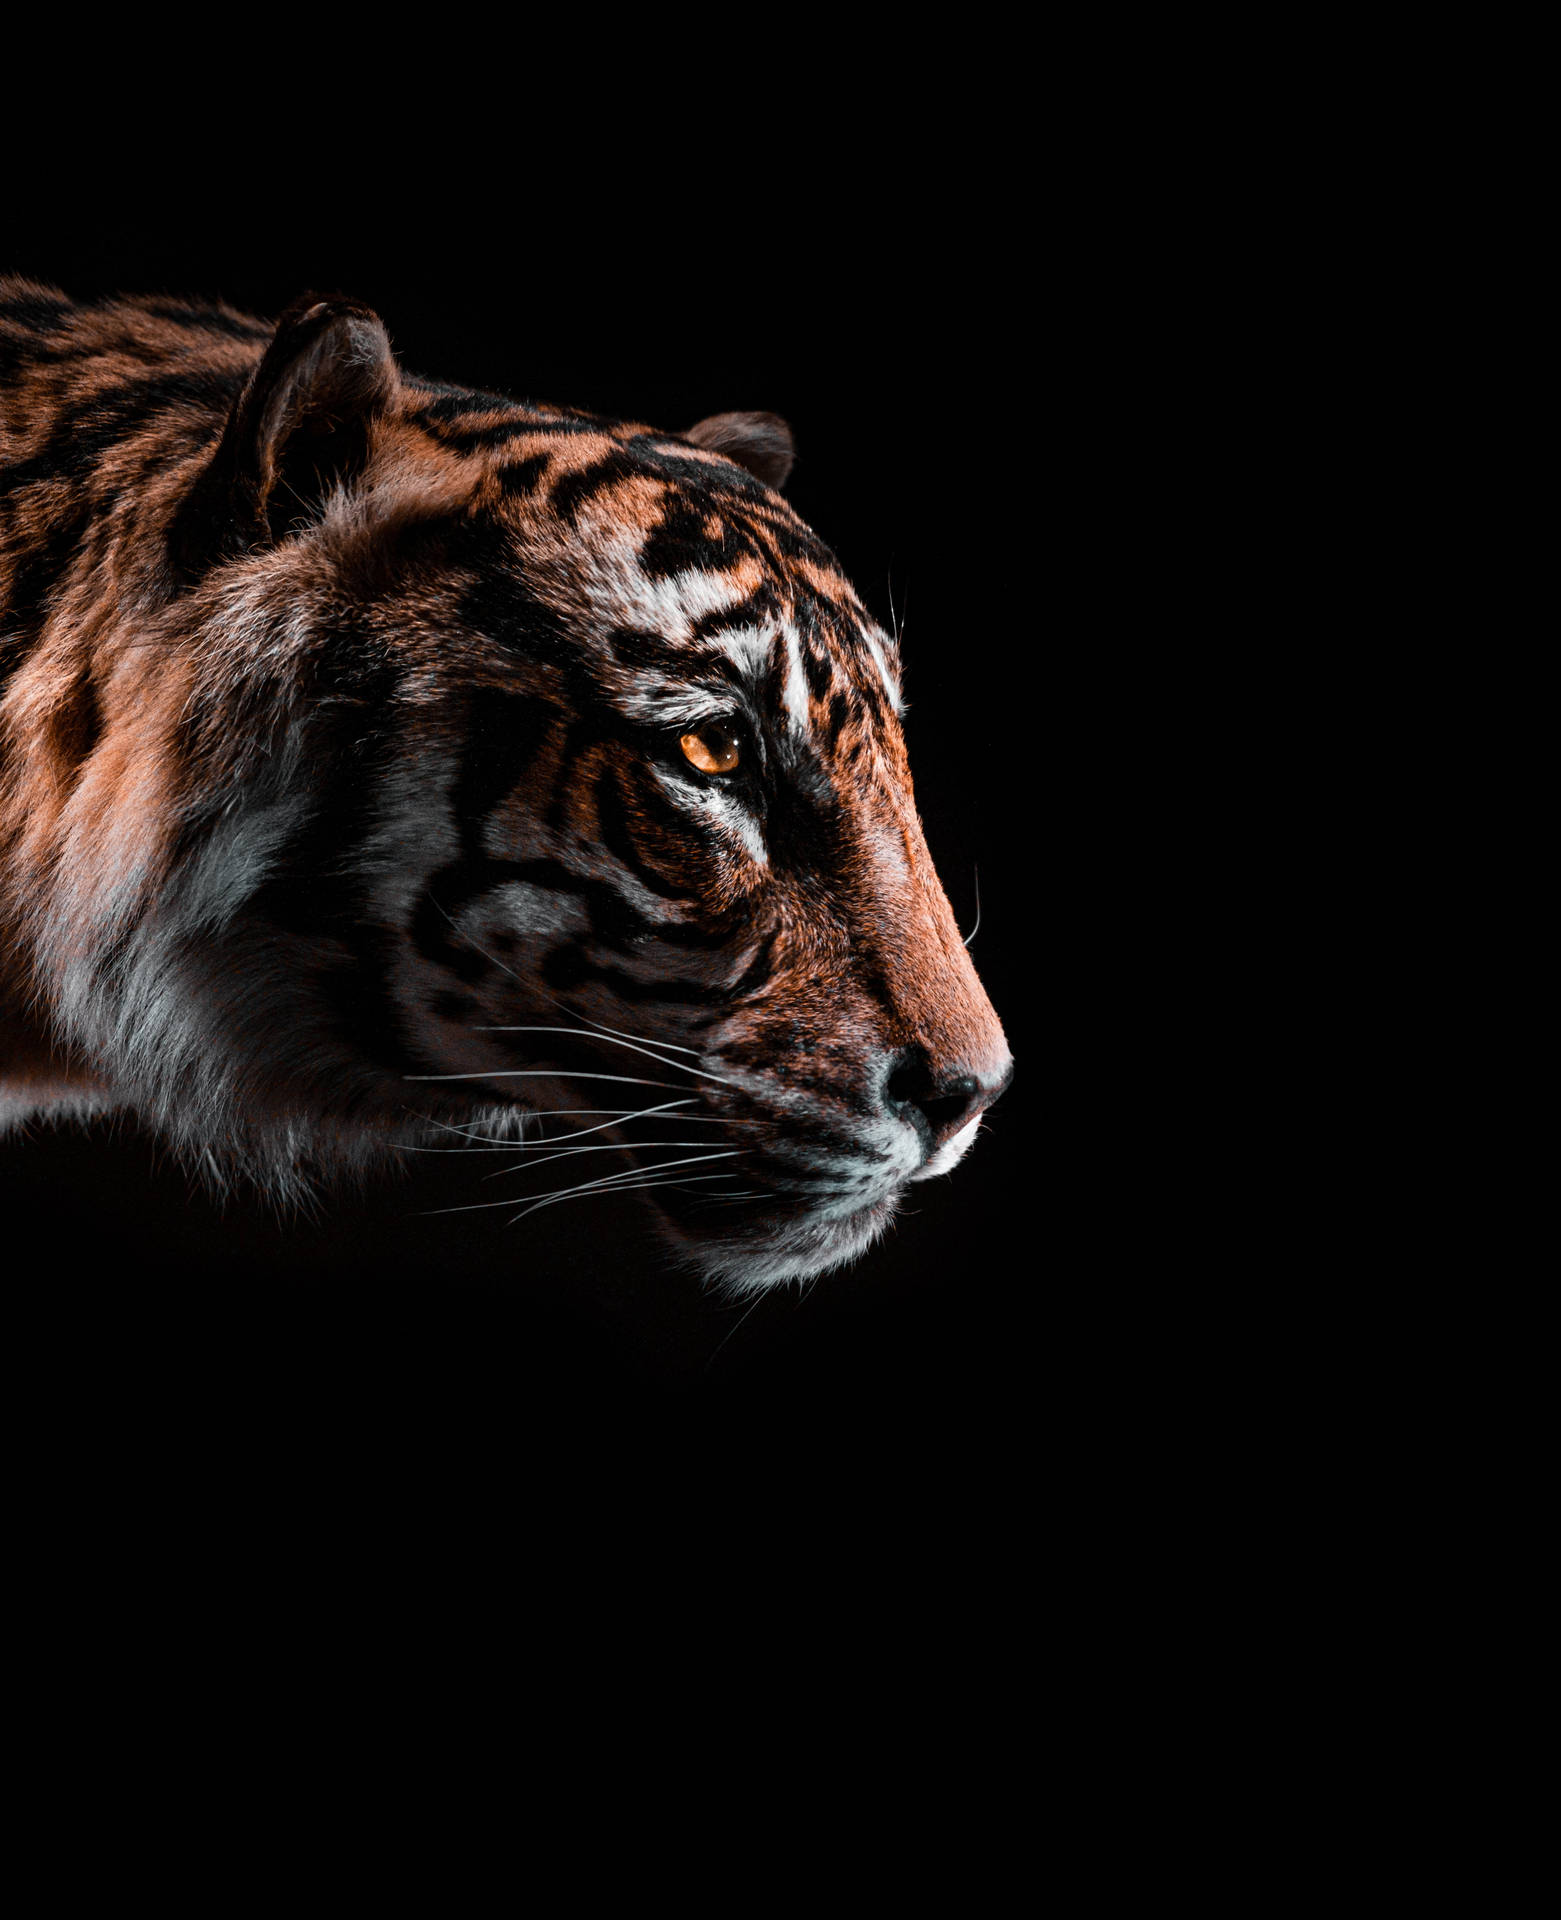 In The Dark Black Tiger Background